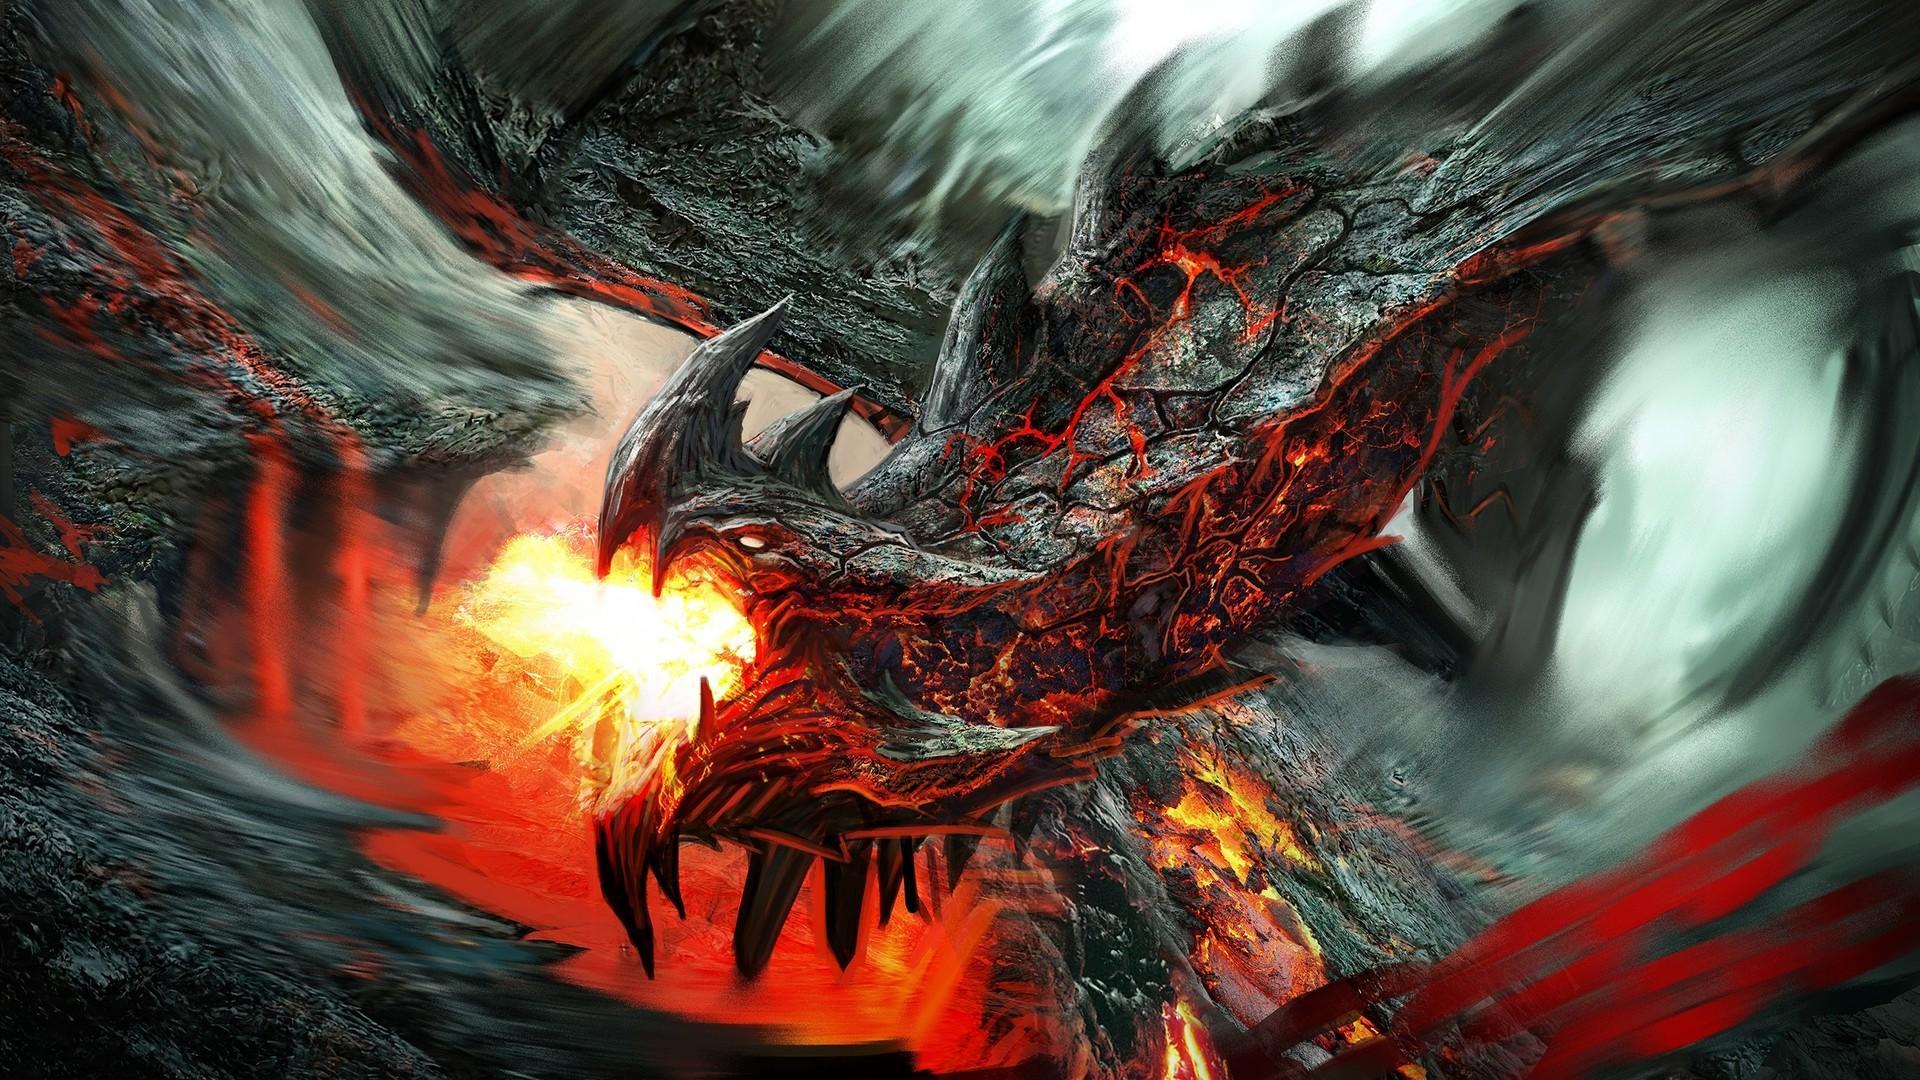 Fire Dragon Live Wallpaper постер.